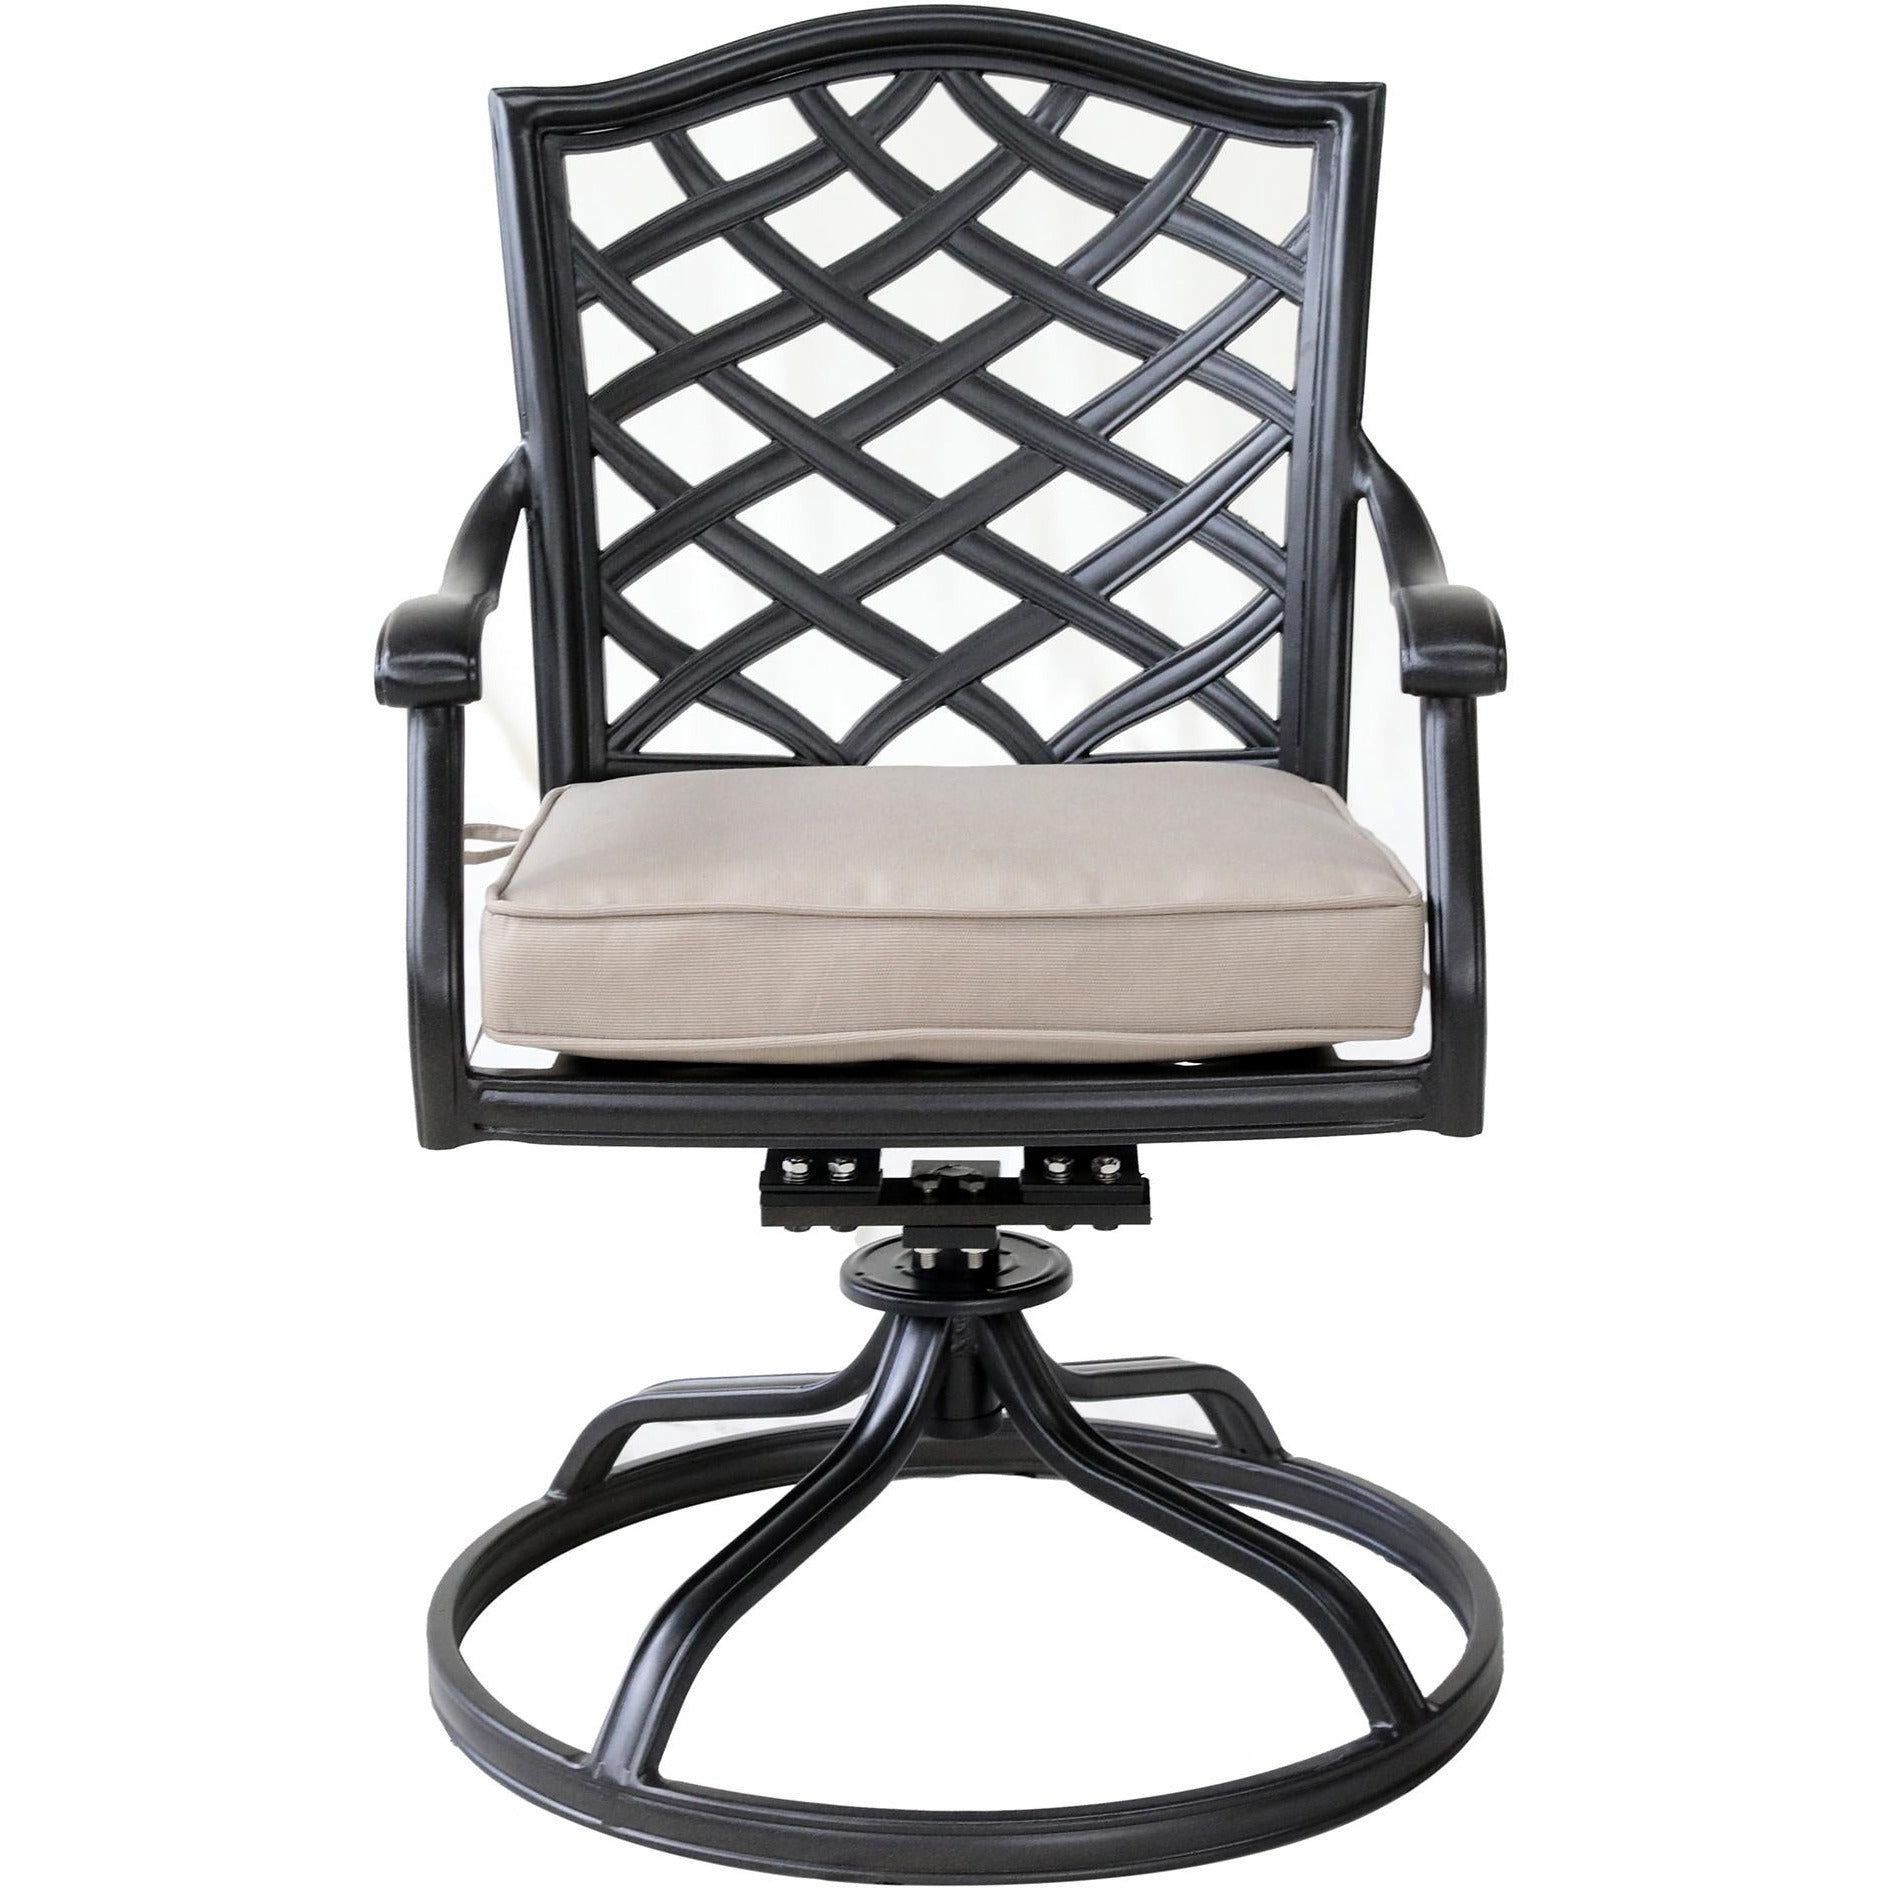 Halston Outdoor Swivel Chair